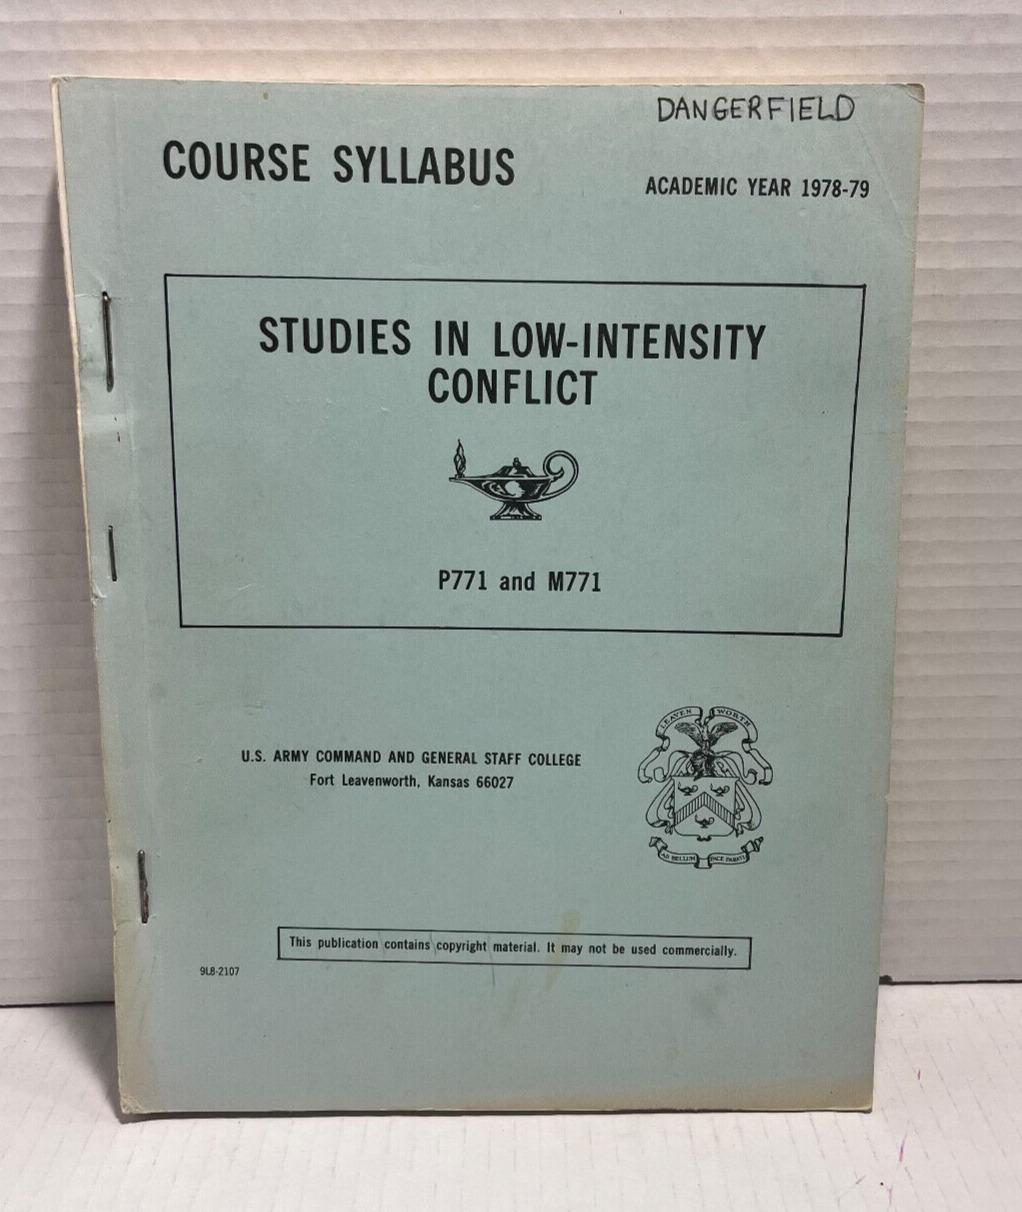 Studies in Low-Intensity Conflict U.S. Army 1978-79